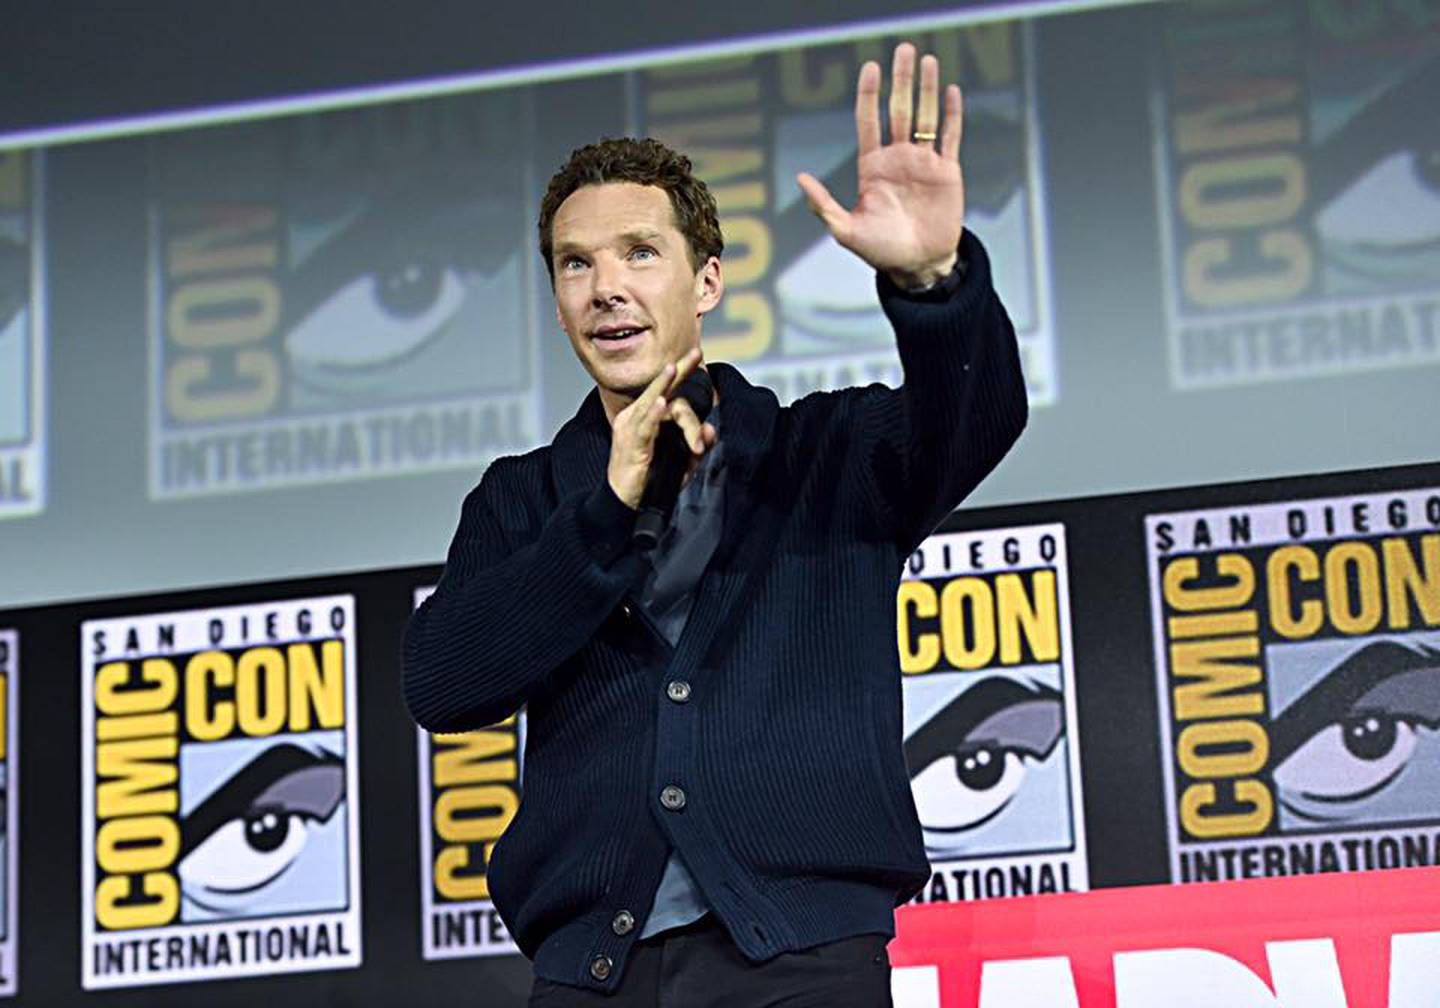 El gran Doctor Strange personaje que interpreta Benedict Cumberbatch